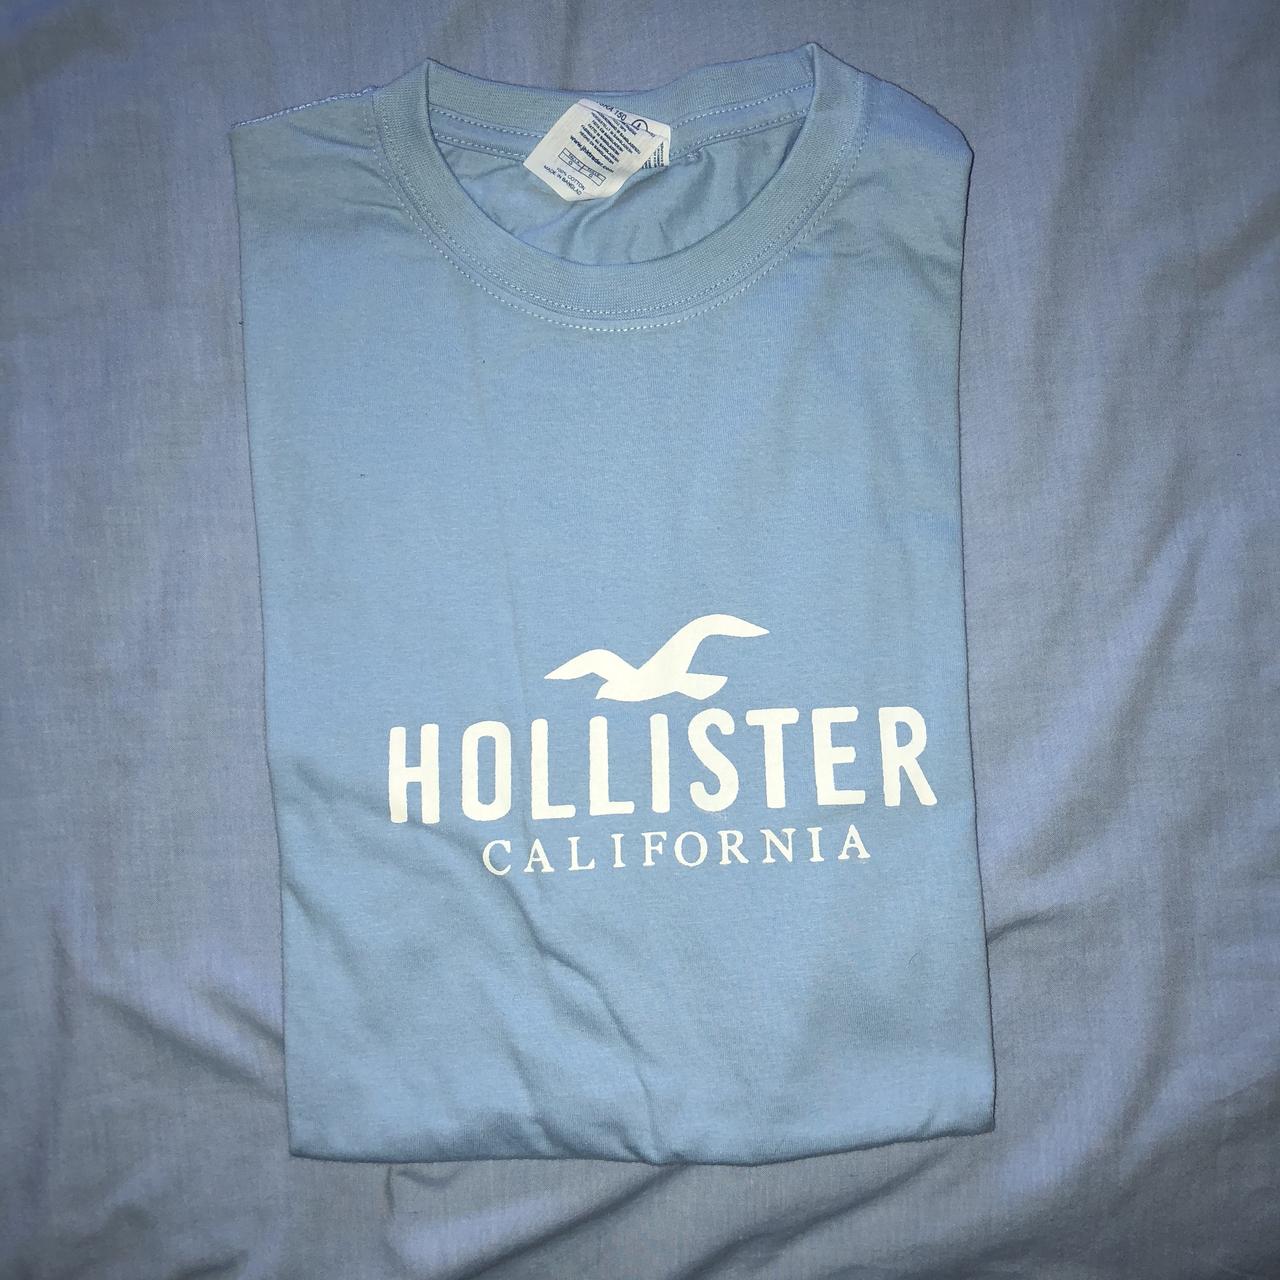 Fake Hollister shirts, size large, light blue and